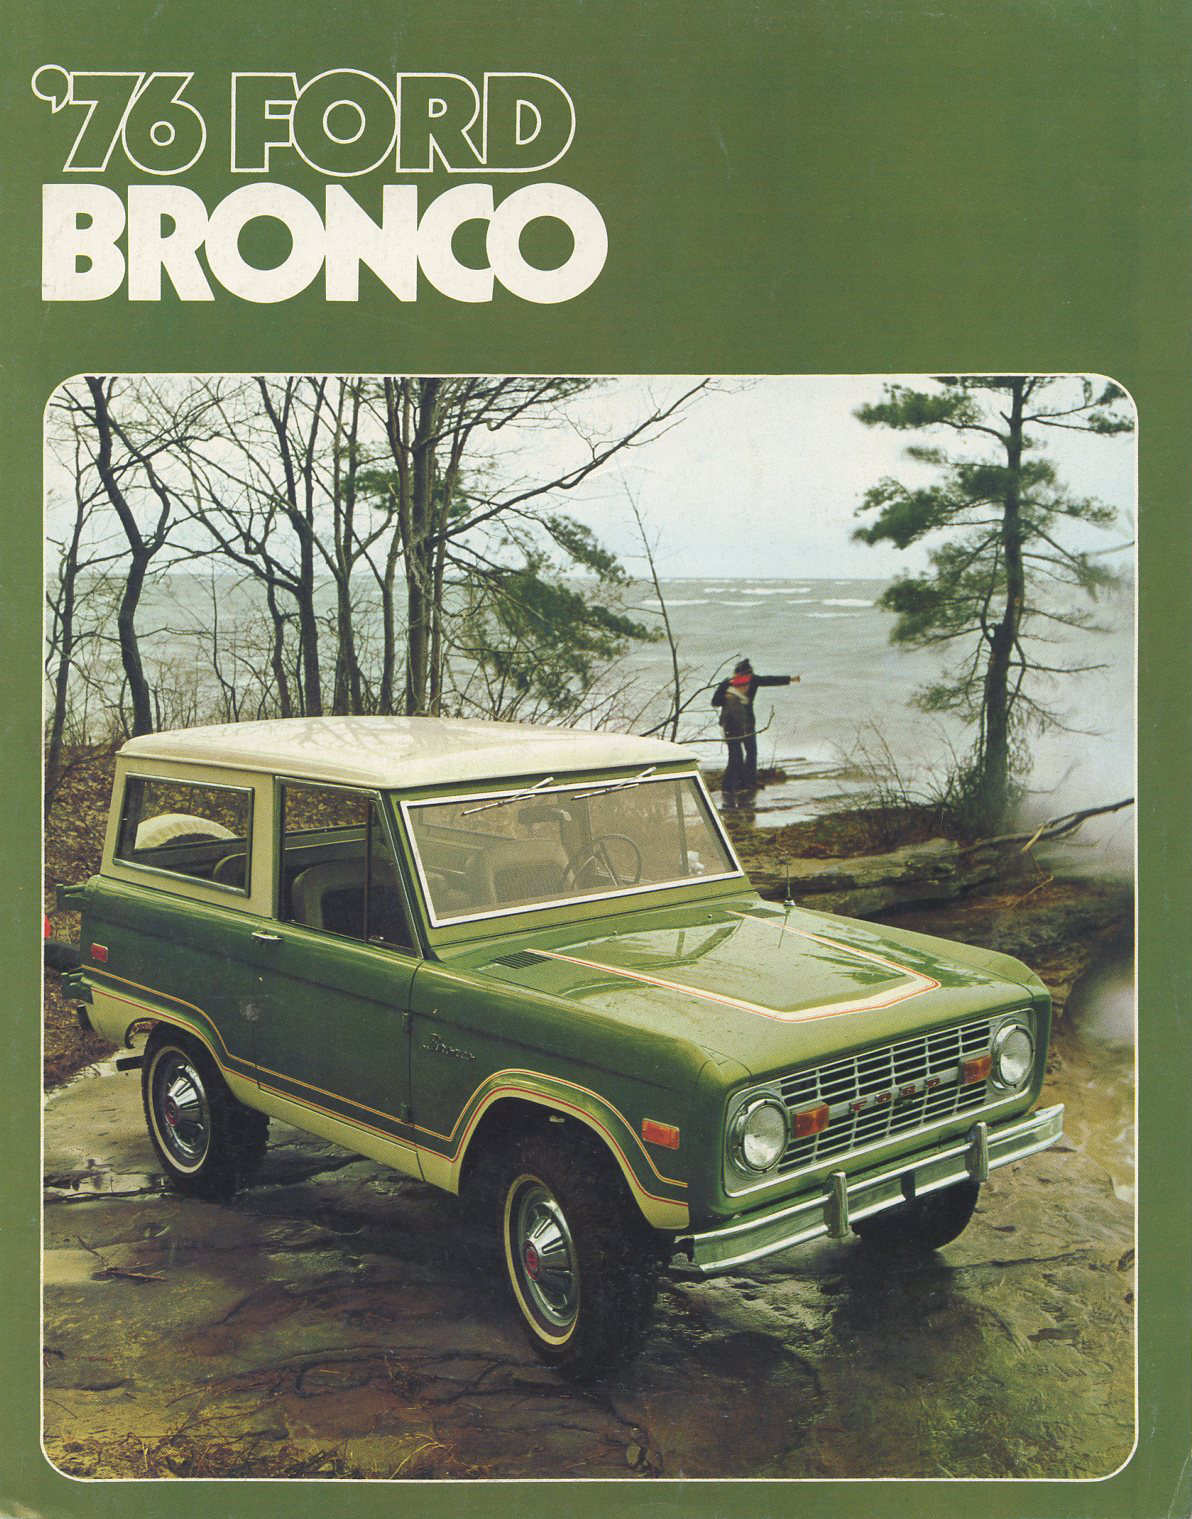 n_1976 Ford Bronco TriFold-01.jpg